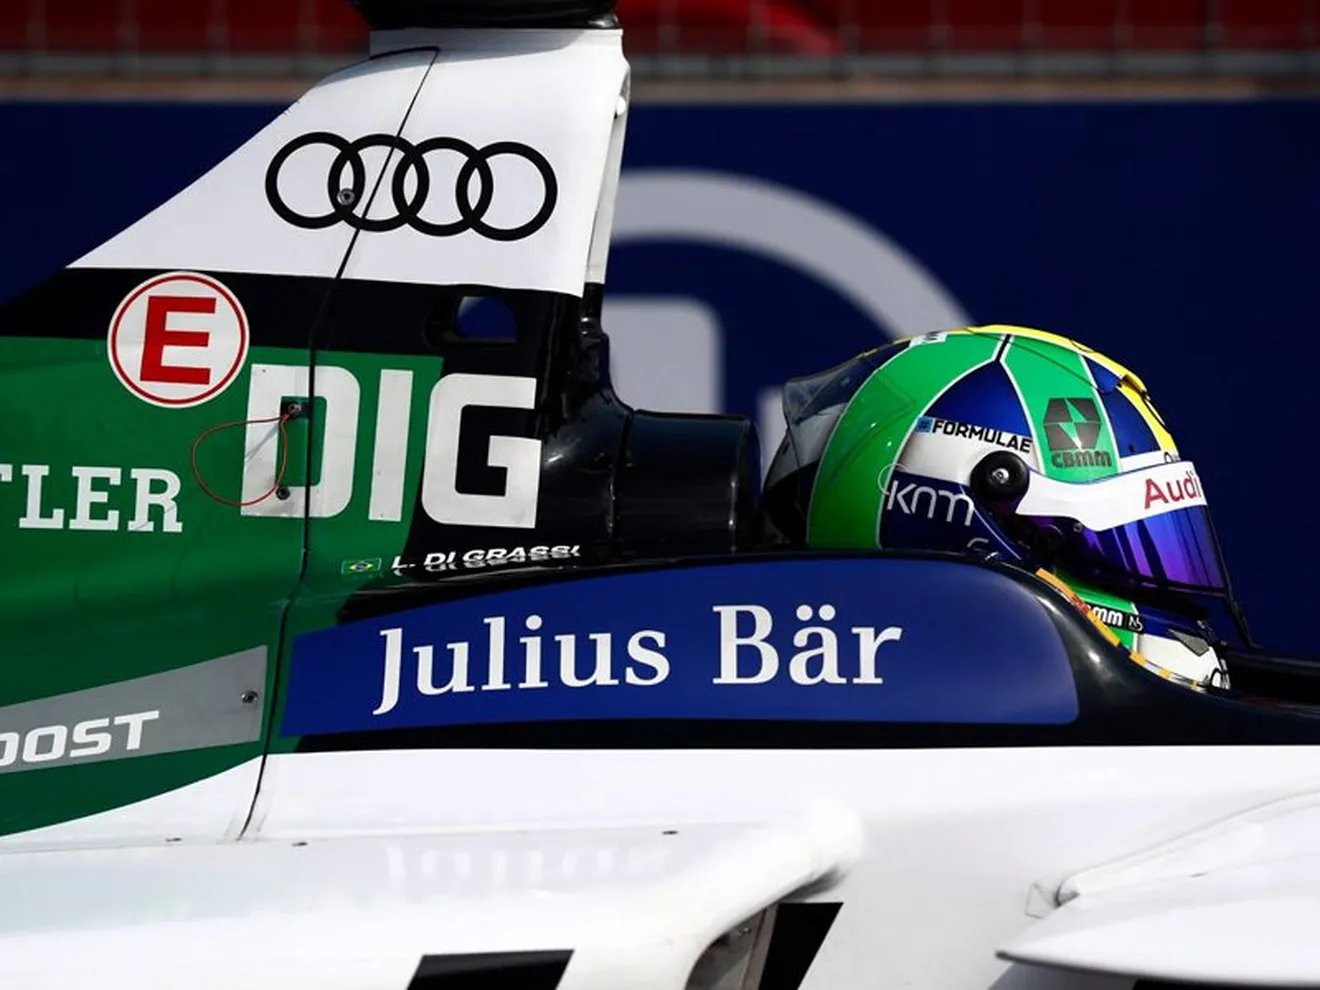 Wolfgang Ullrich: "La Fórmula E es totalmente diferente"